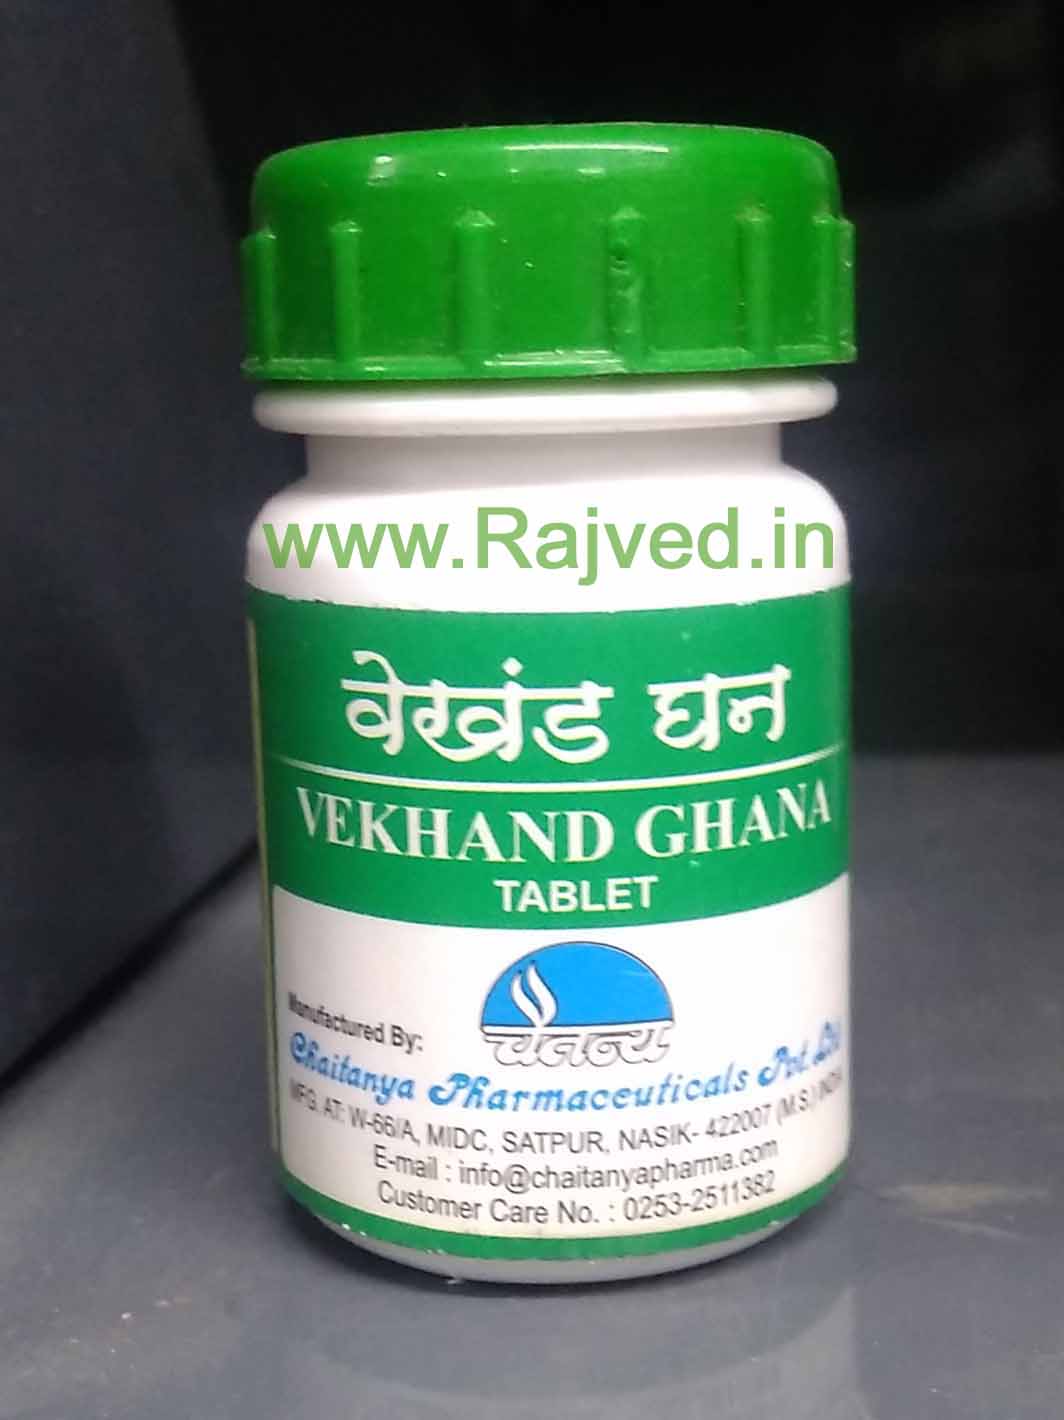 vekhand ghana 500tab upto 20% off free shipping chaitanya pharmaceuticals